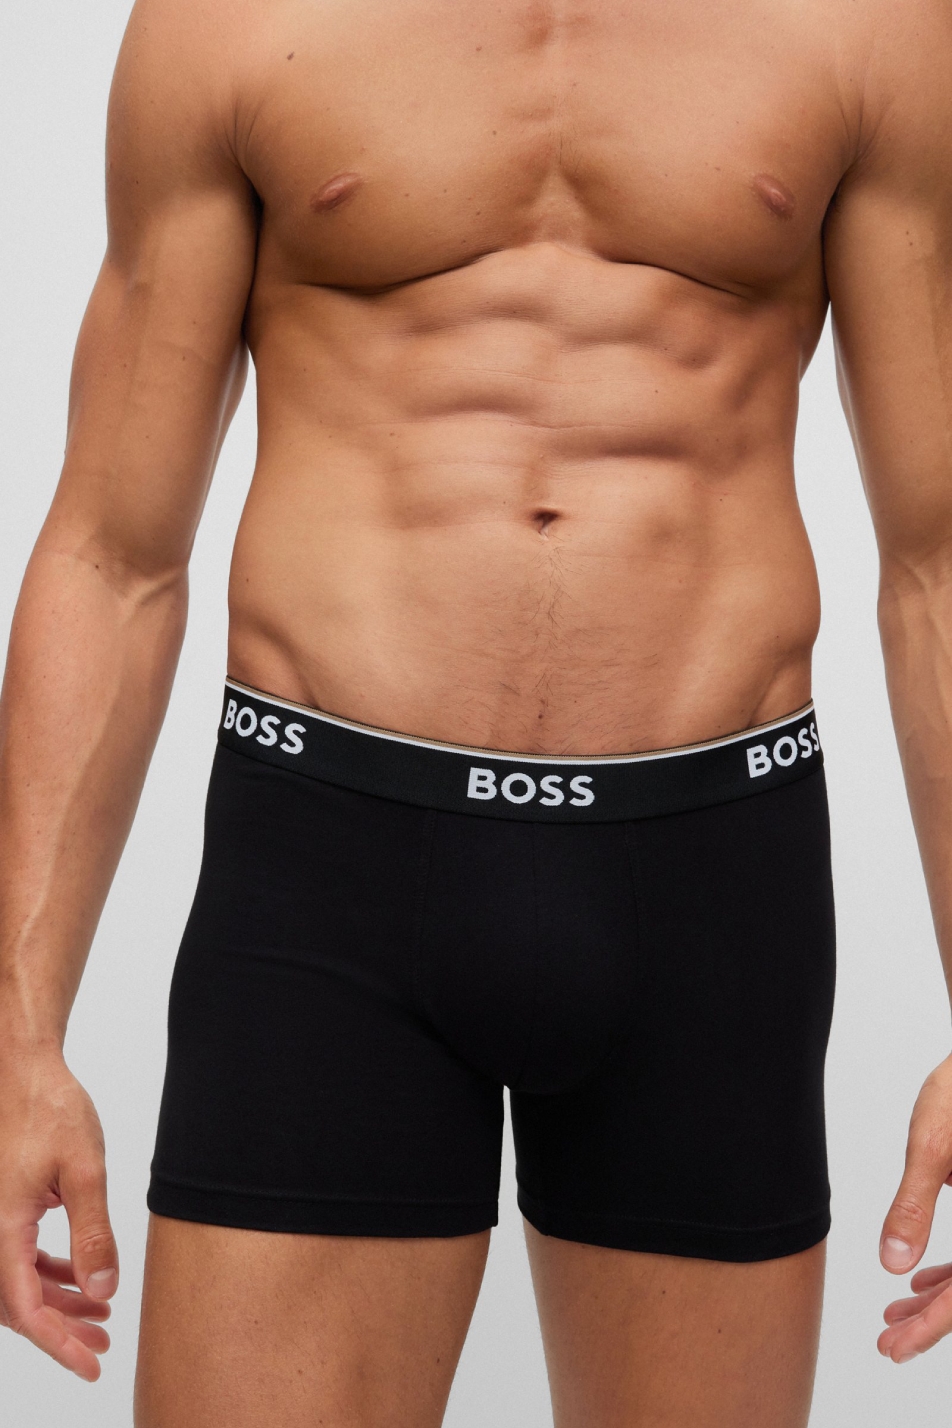 Boss 3 Pack Men's Boxer Brief